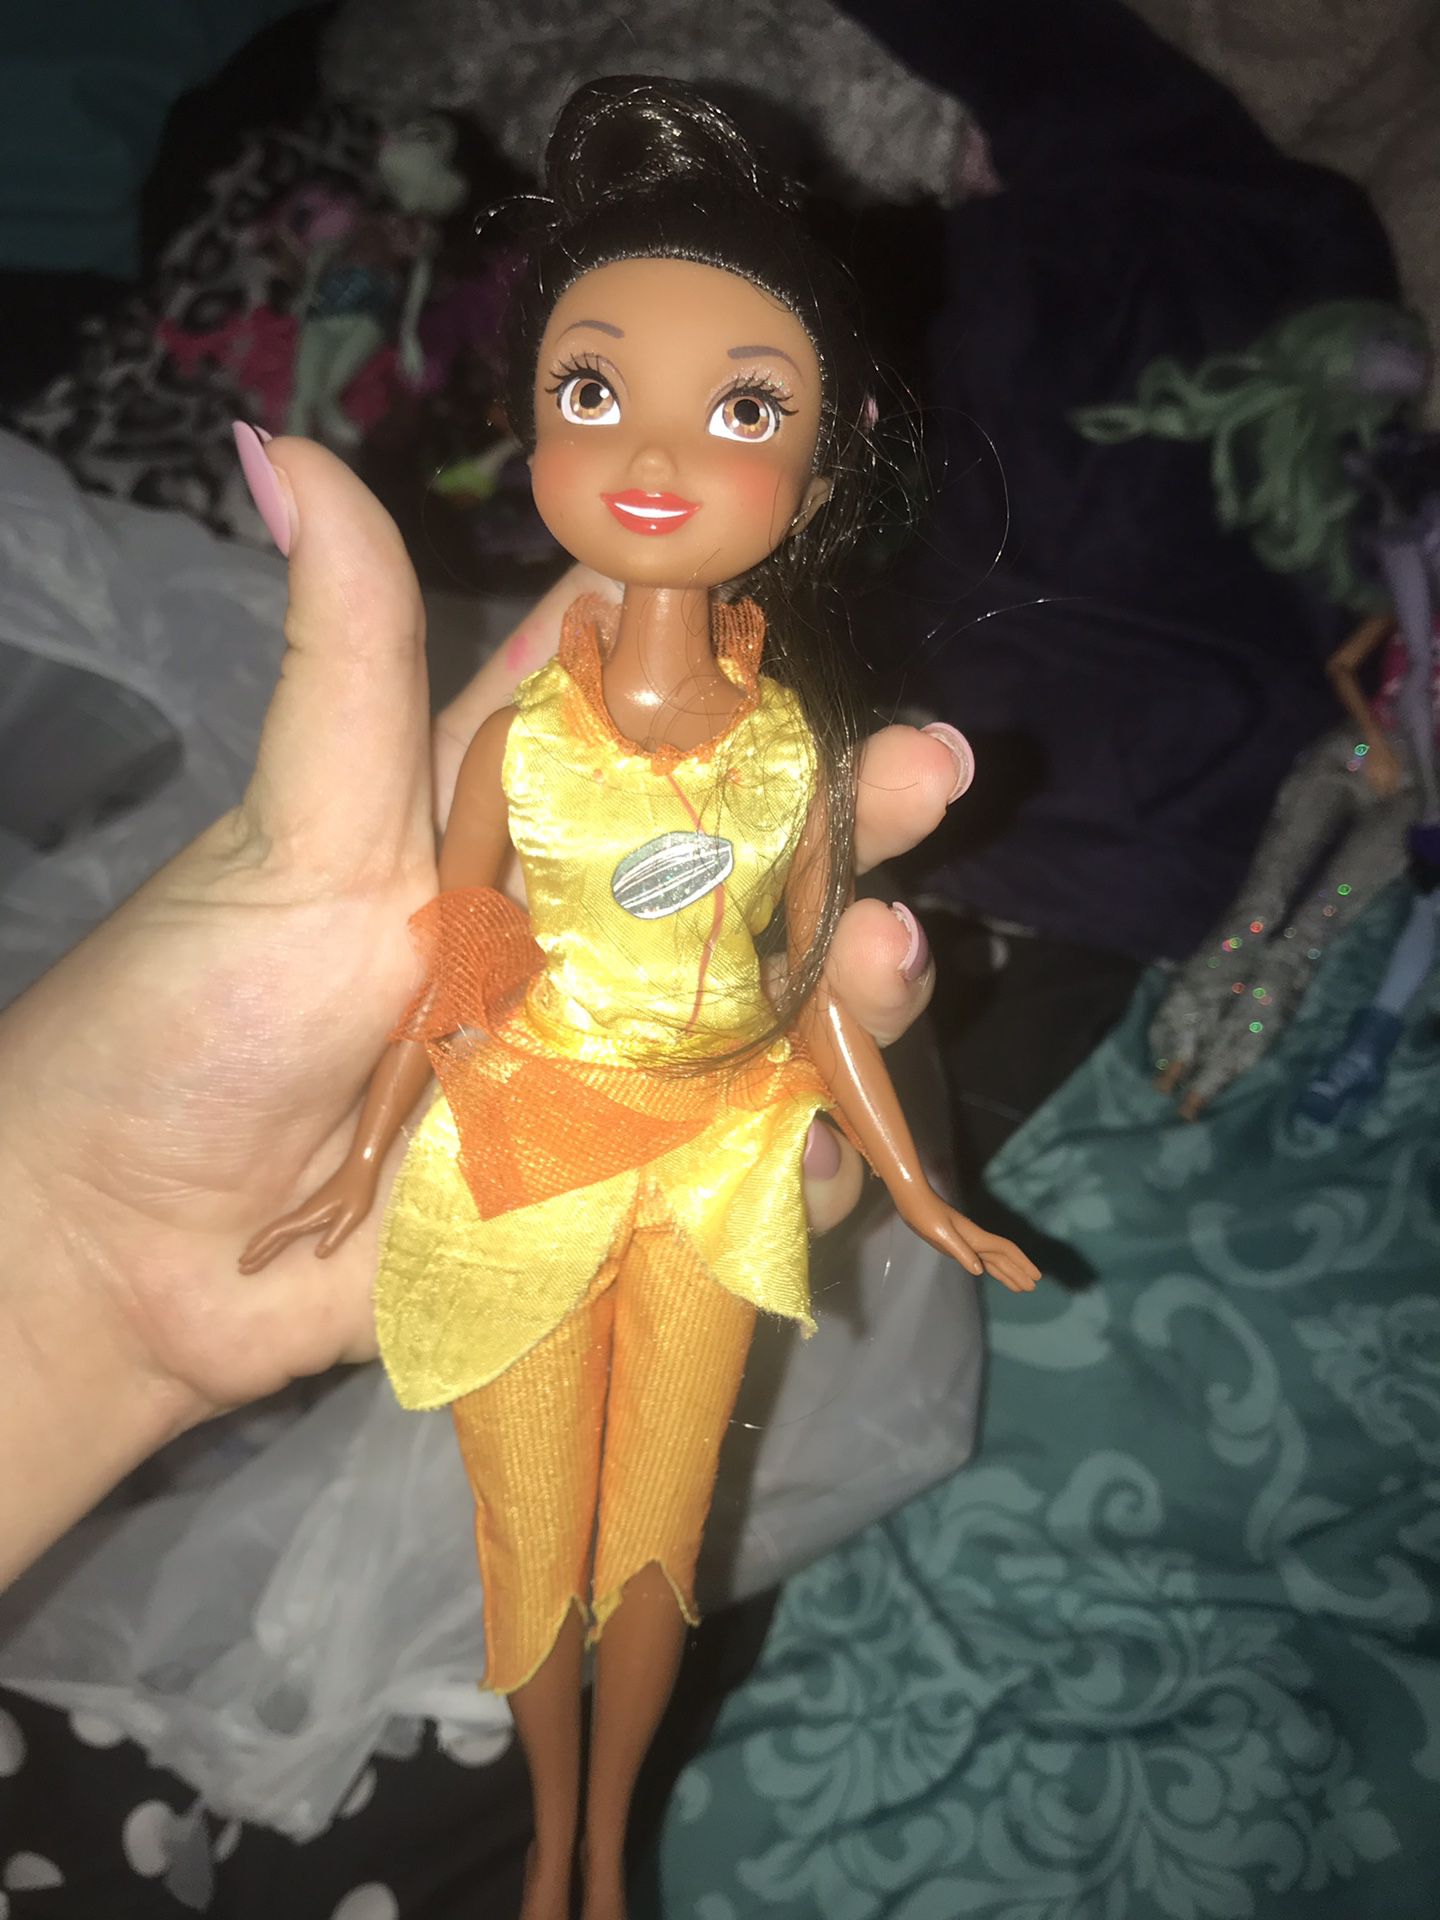 Tinker bell fairy doll